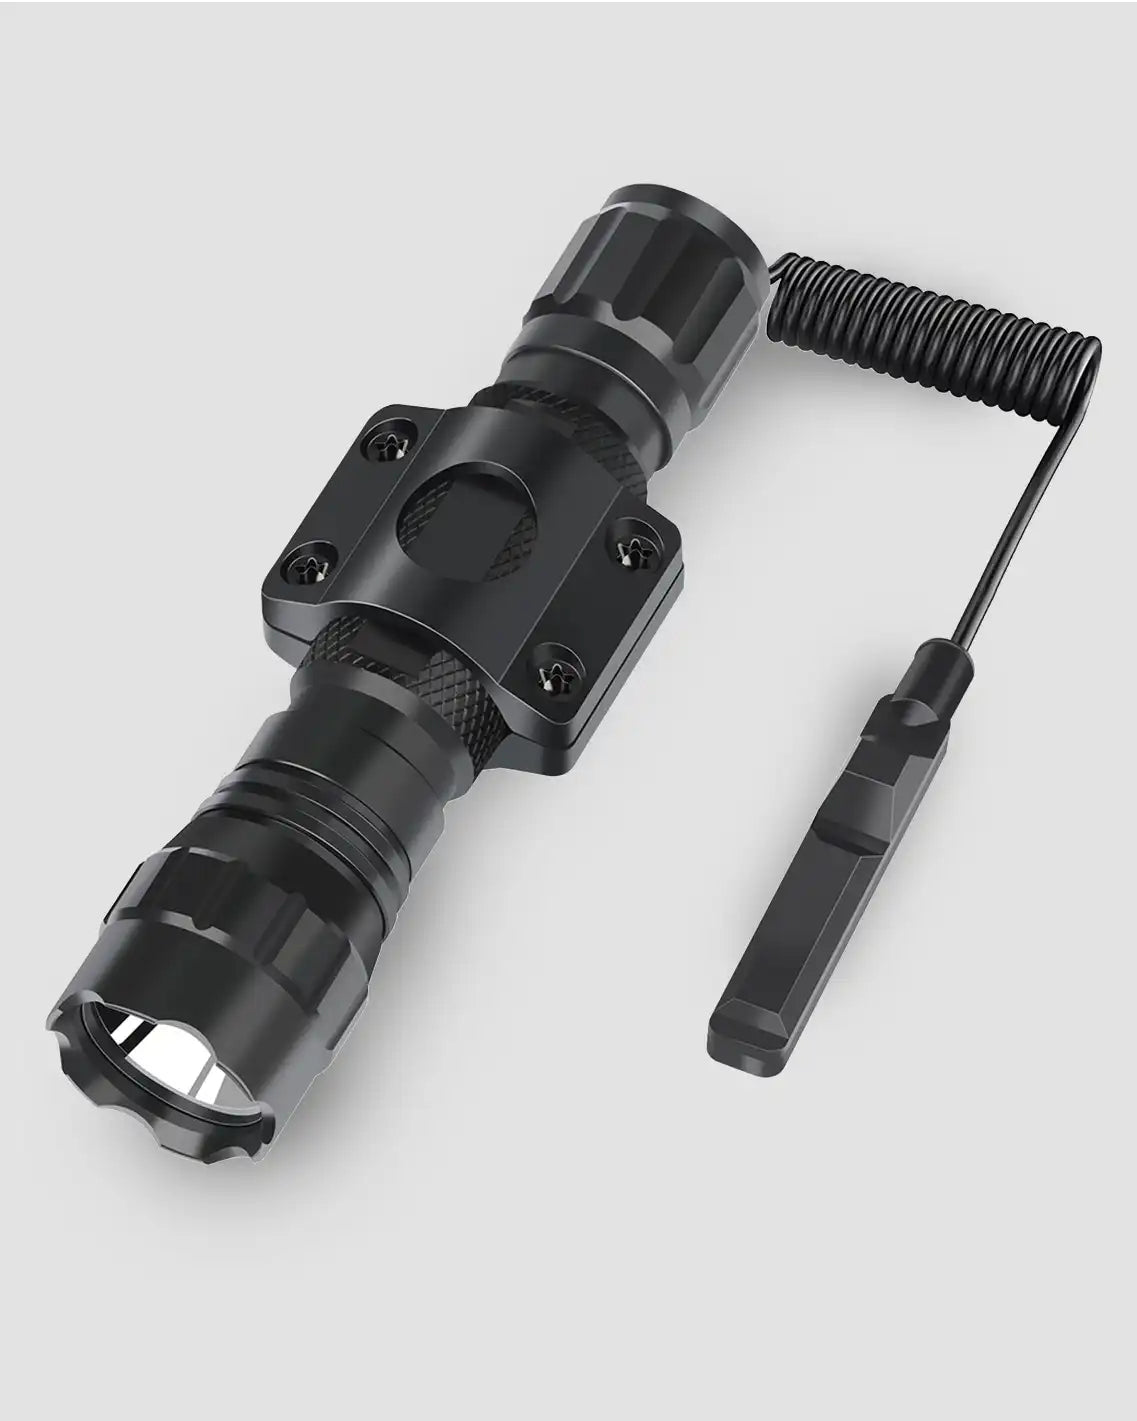 Feyachi FL22 Tactical Flashlight with Mount - 1200 Lumen Mlok